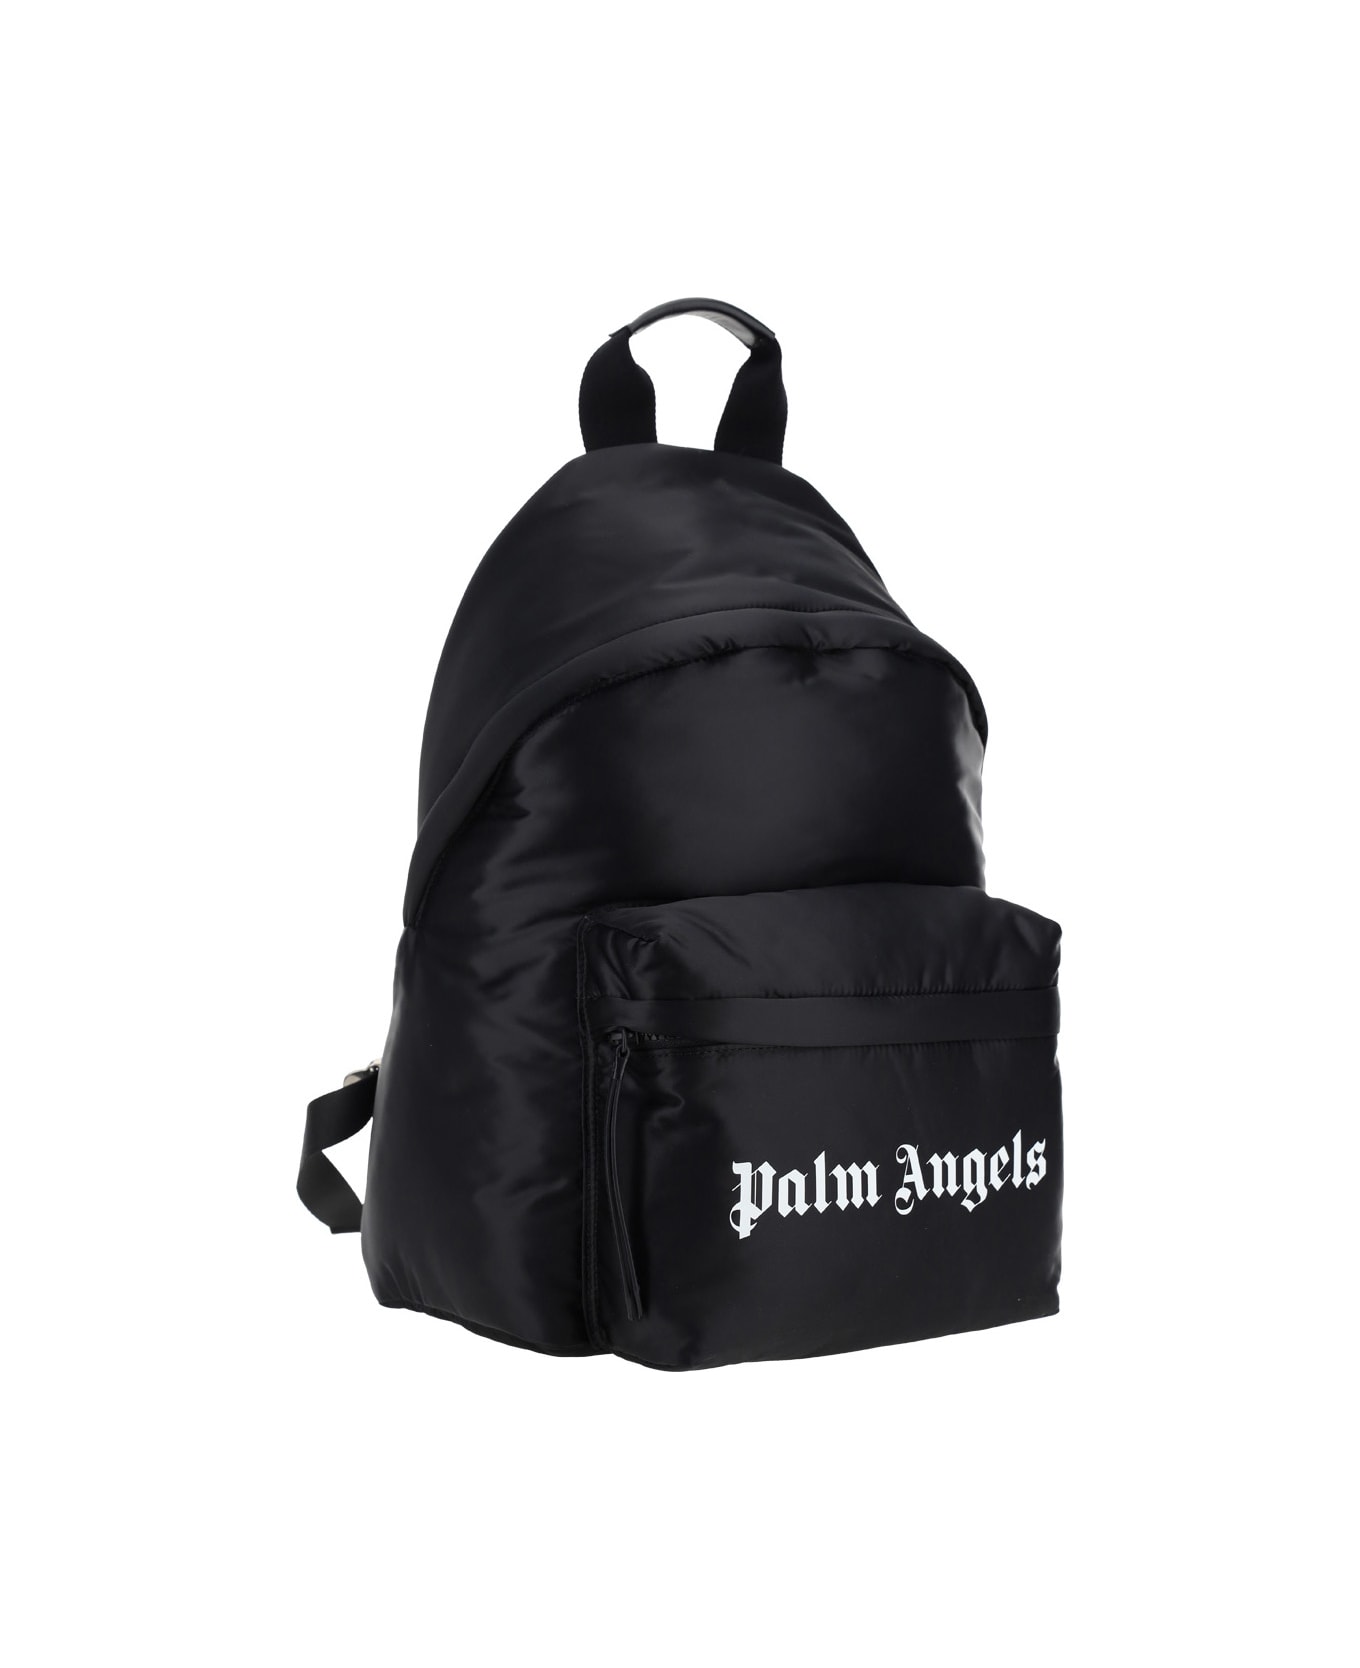 Palm Angels Backpack - Black/white